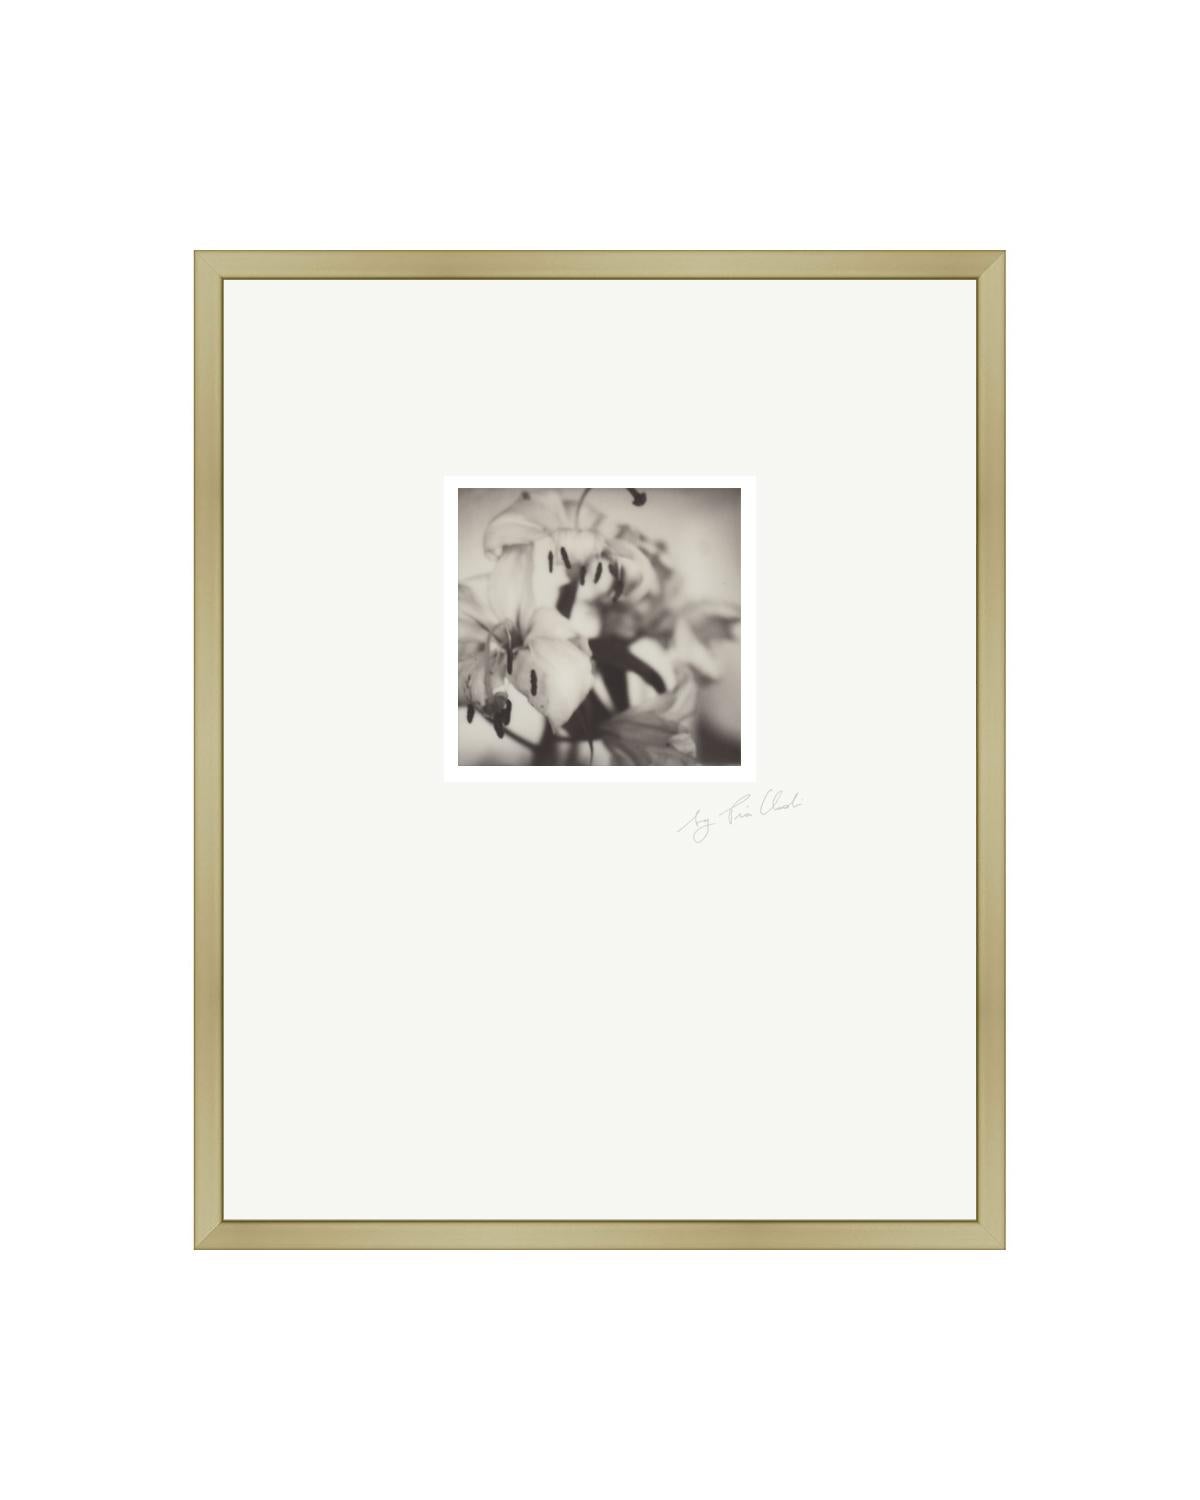 Past Bloom III - Contemporary Black & White Polaroid Original Photograph Framed